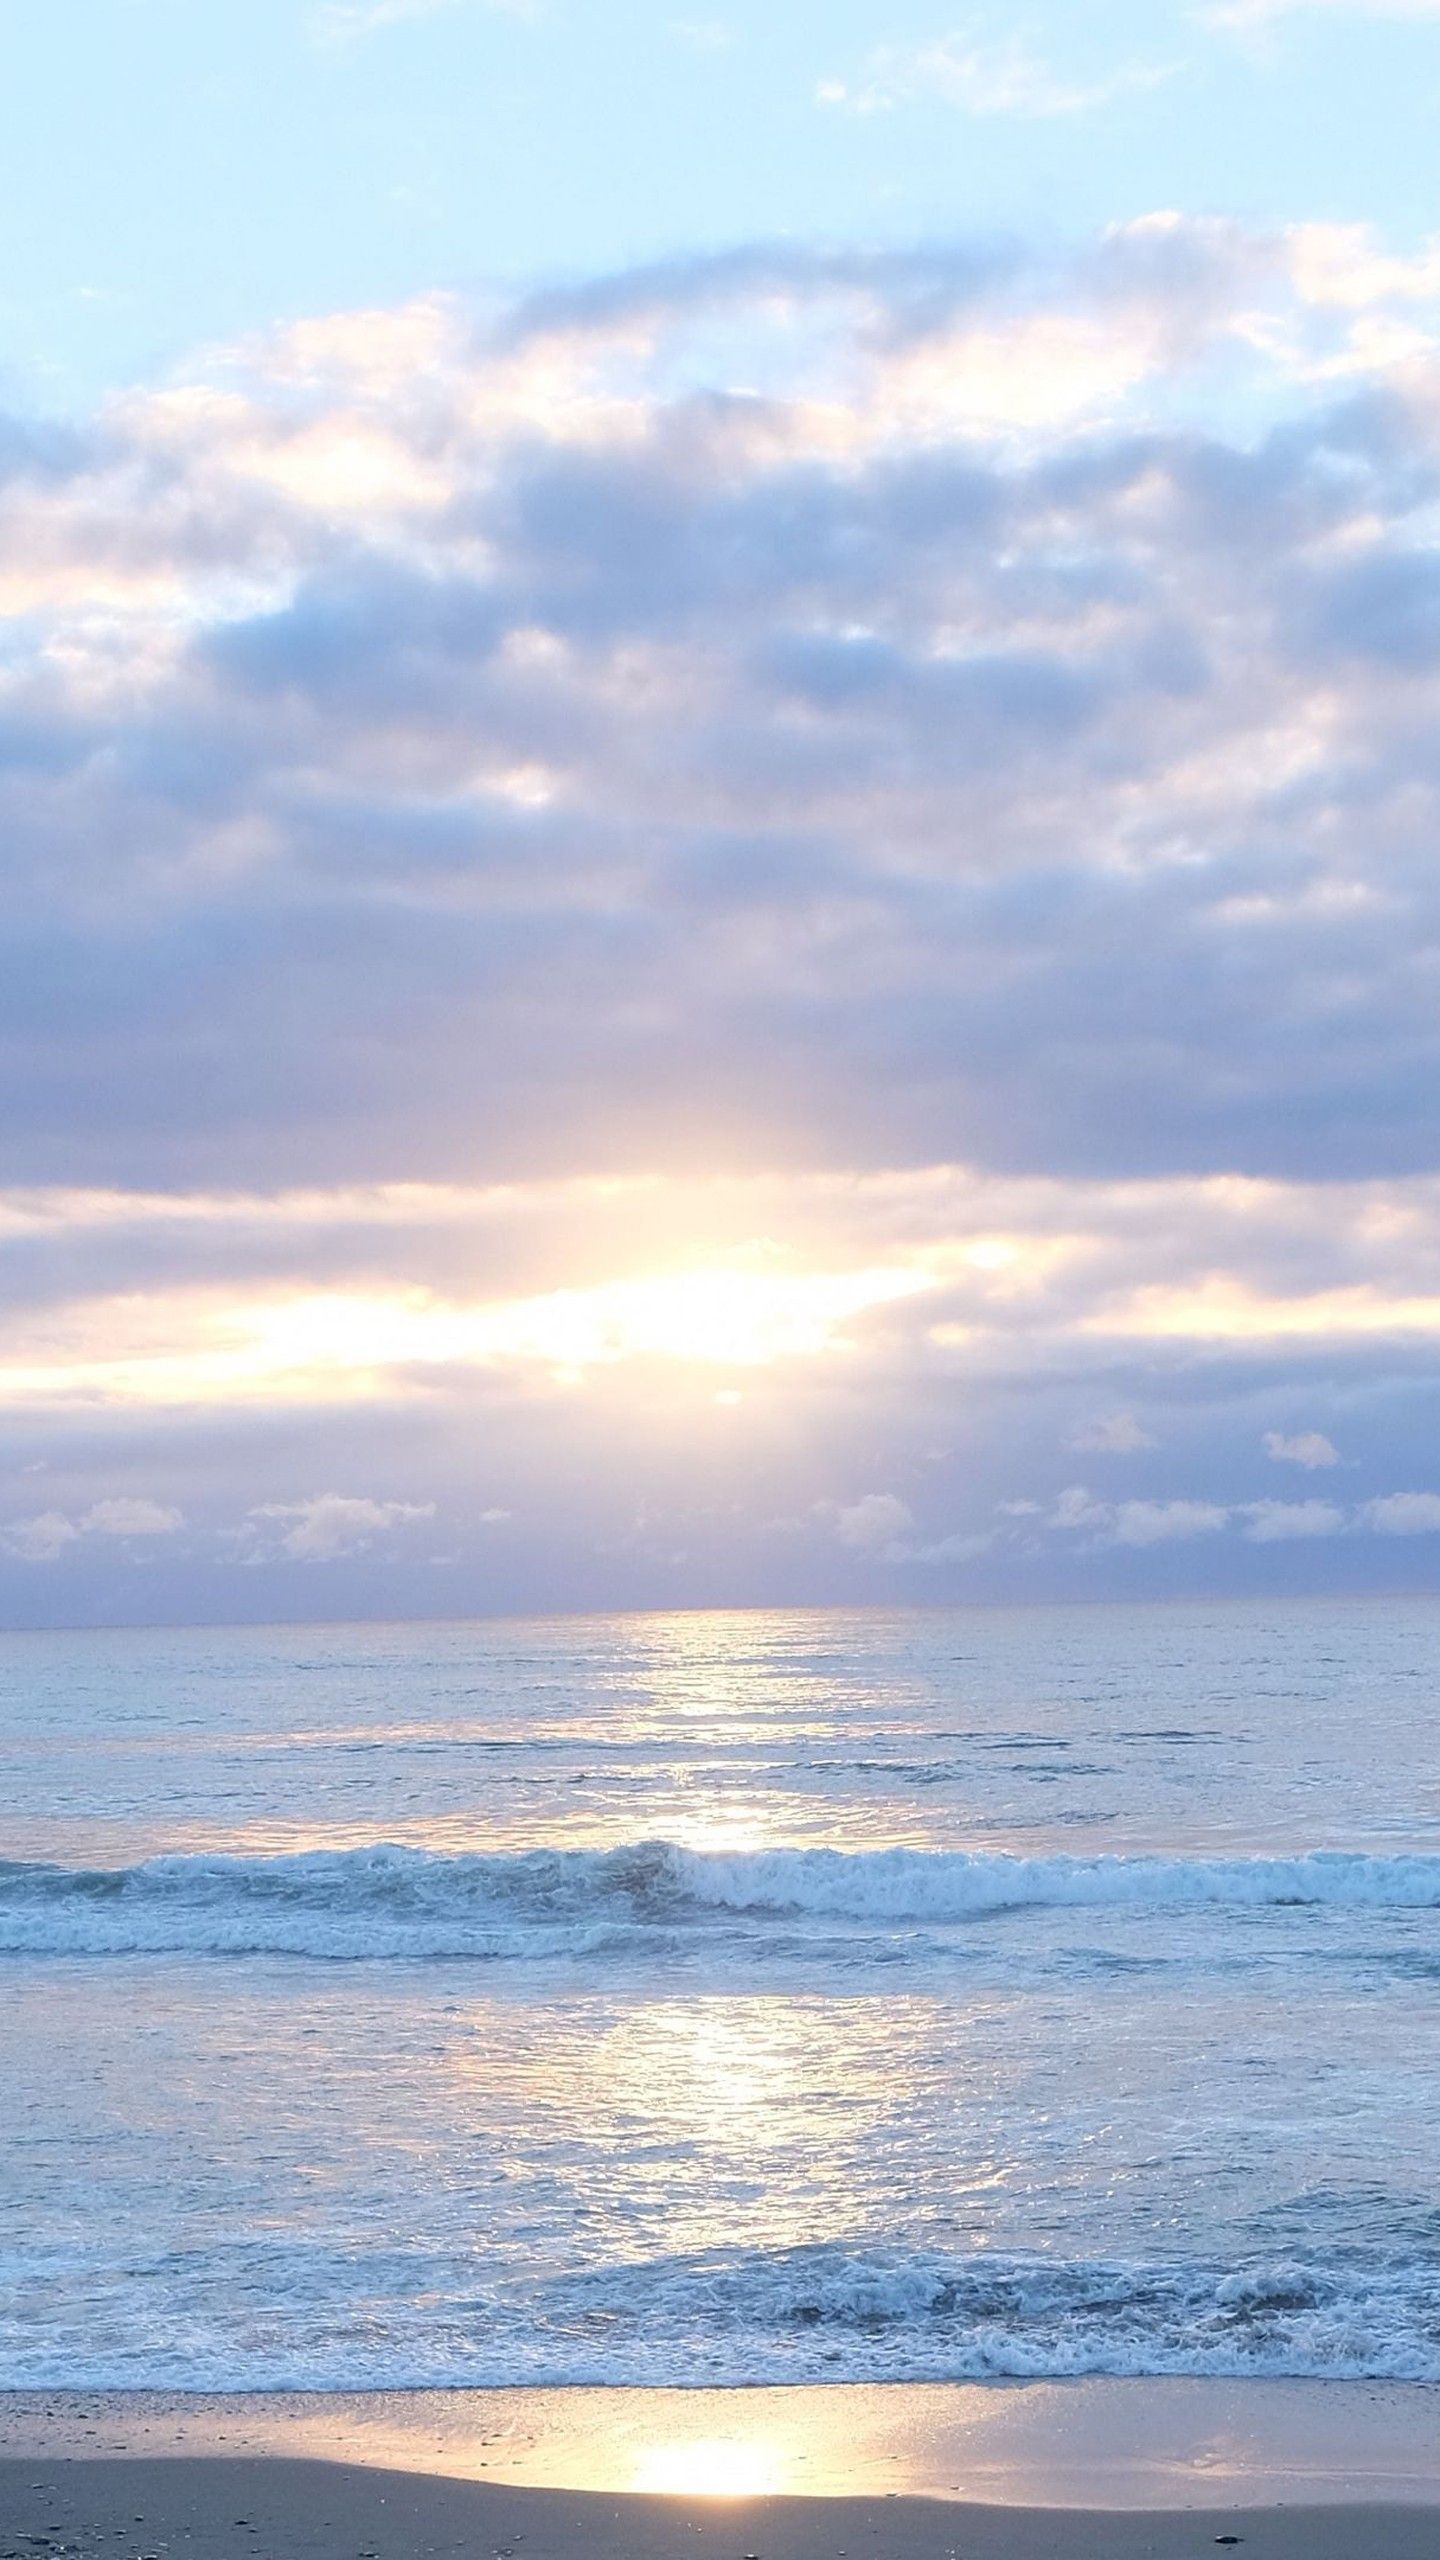 Ocean Waves Beach Sand Under White Clouds Blue Sky During Sunrise 4K HD Nature Wallpaper